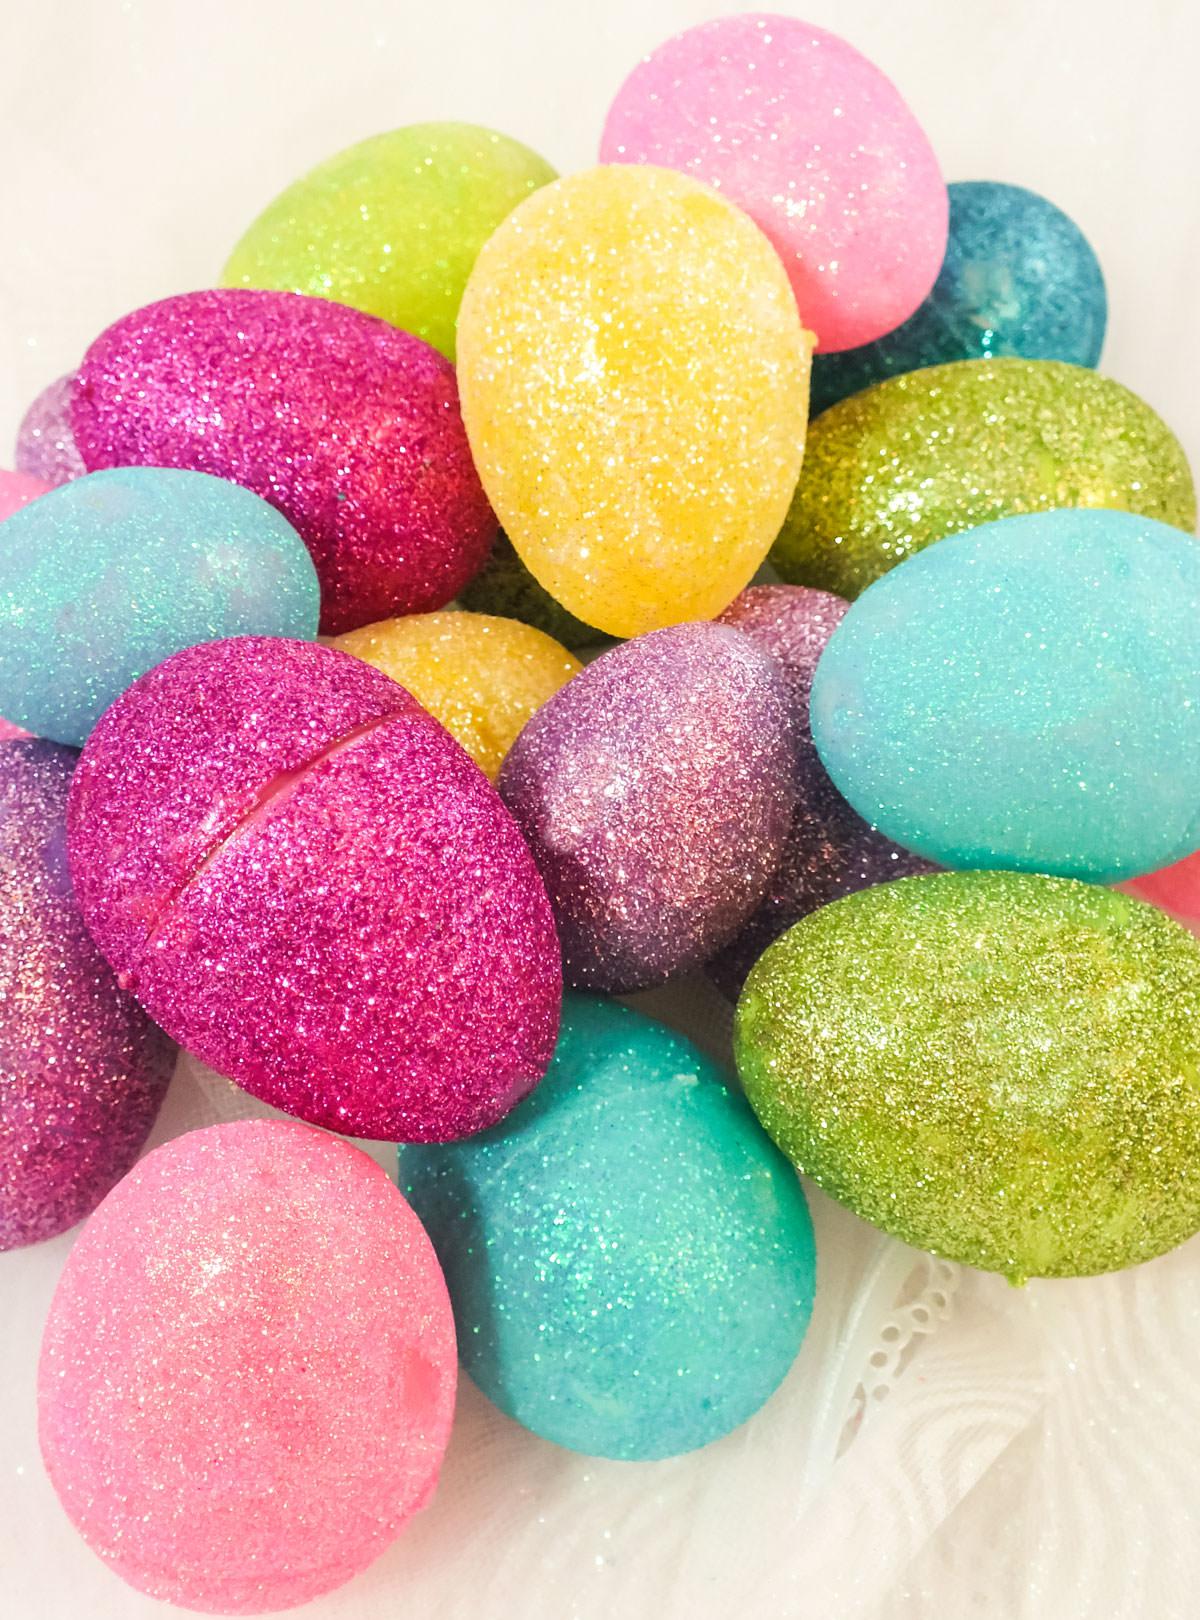 Plastic Easter Eggs Wallpapers - Top Free Plastic Easter Eggs ...